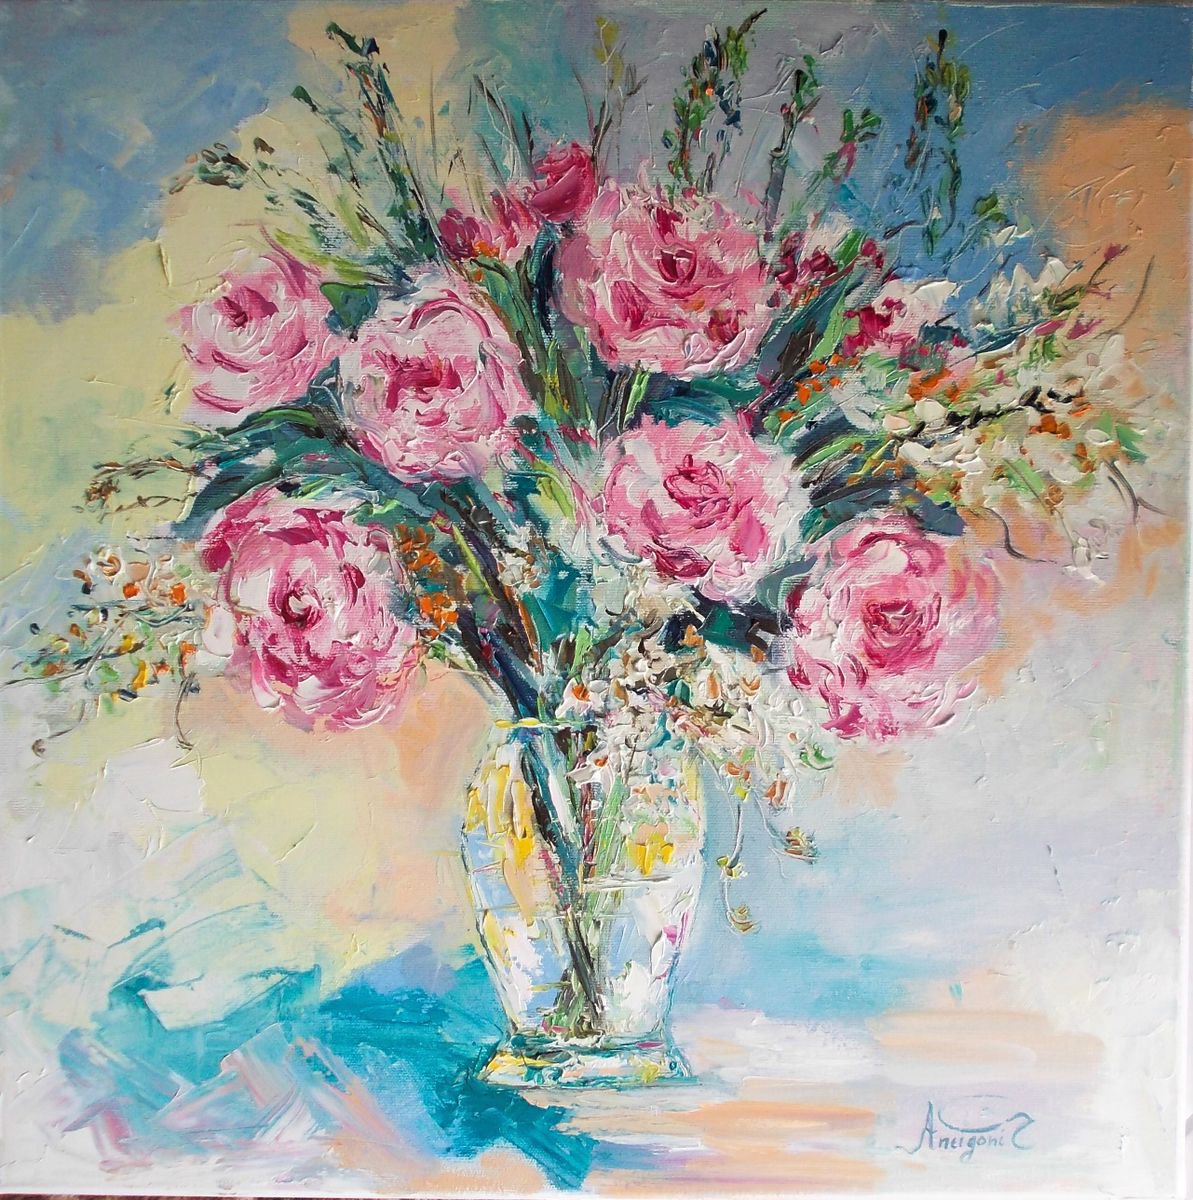 Morning Joy-Roses oil painting-Still life roses by Antigoni Tziora